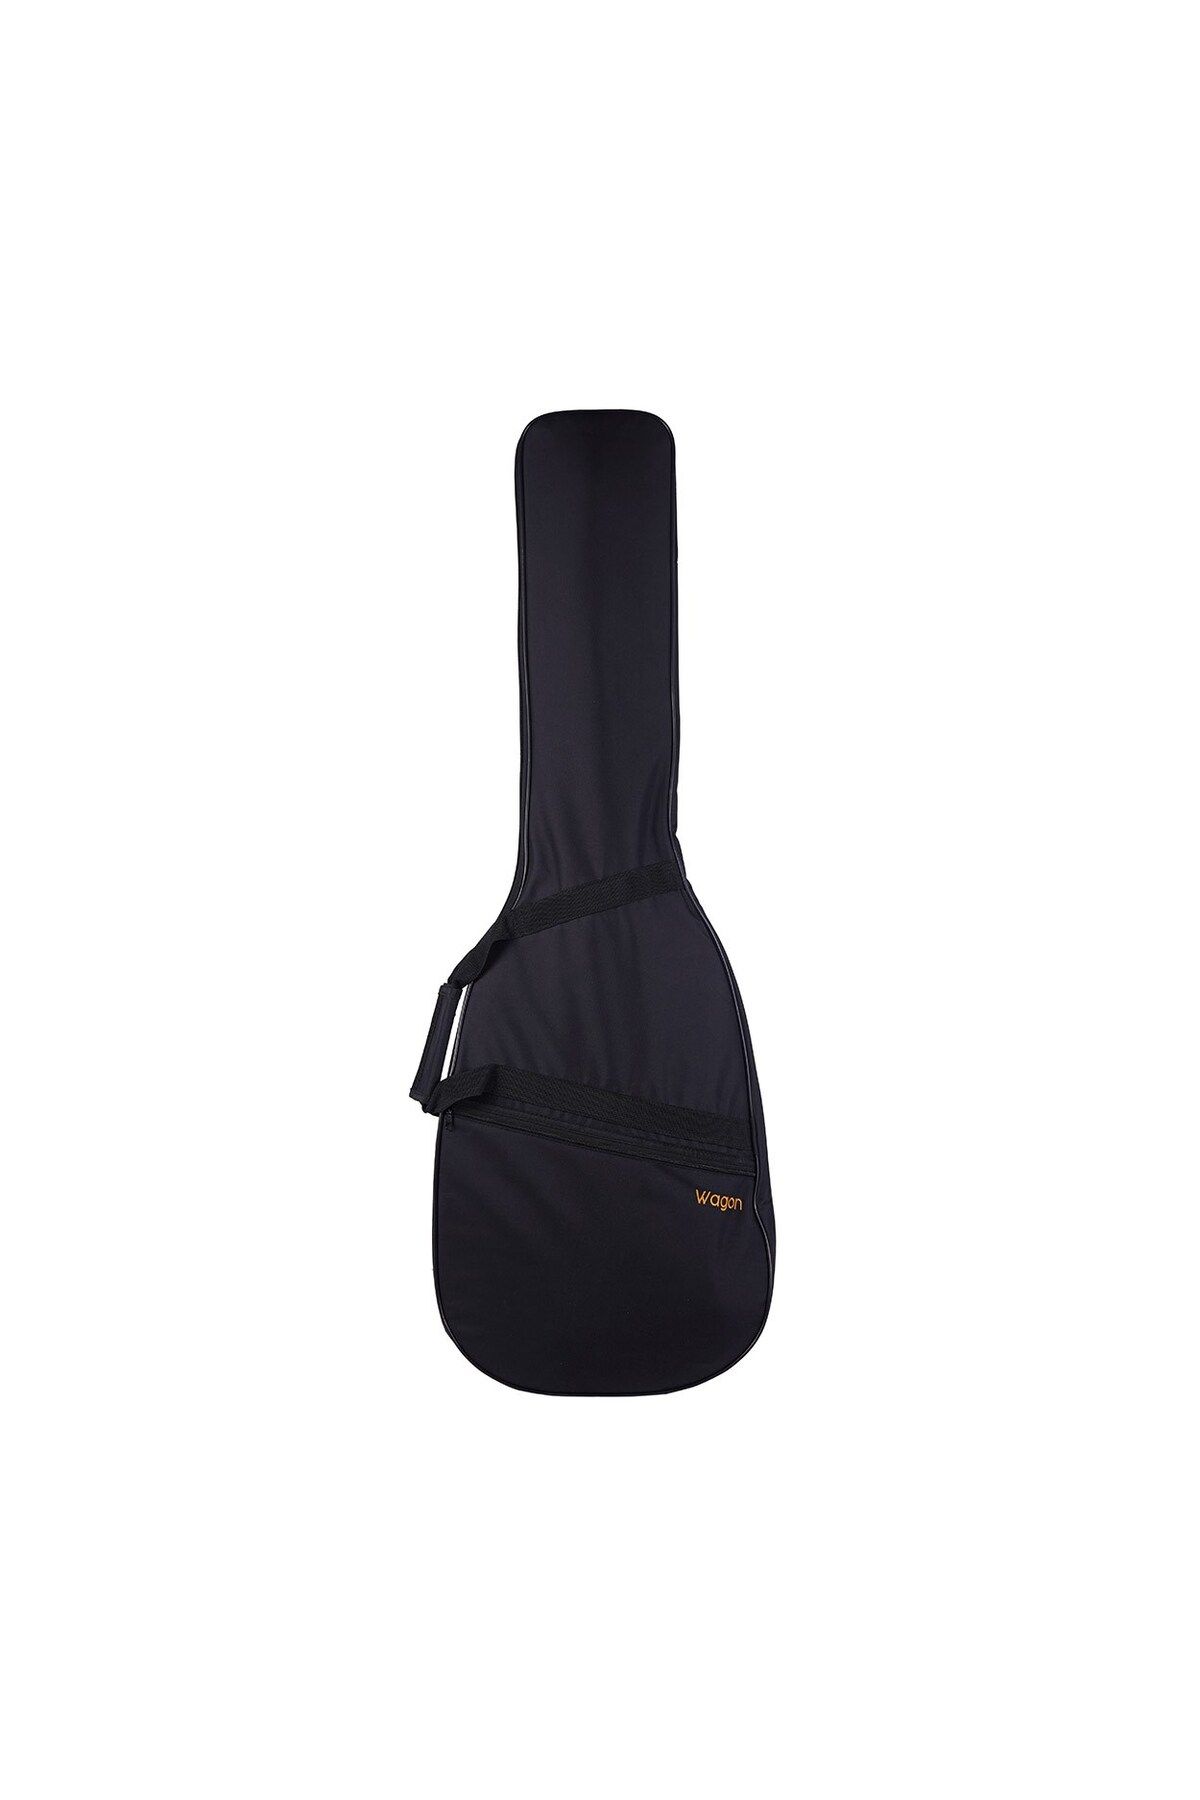 Wagon 01 Serisi Bas Gitar Çantası - Siyah